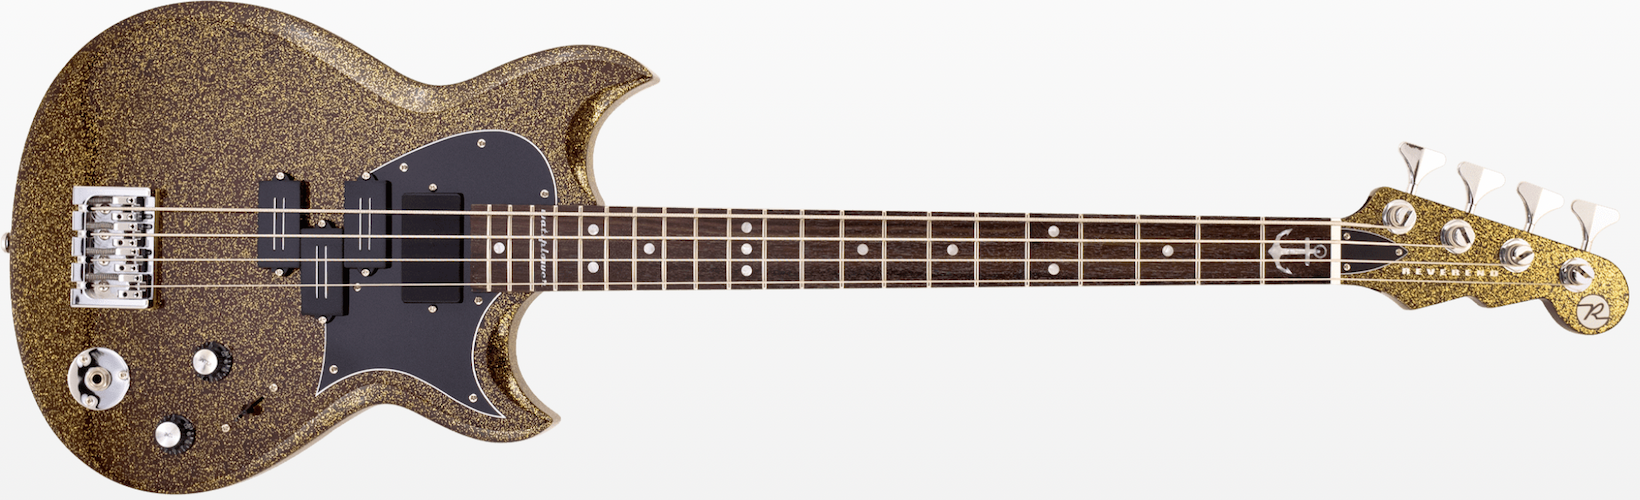 Reverend Wattplower Mark II Bass Guitar w/Case - Root Beer Sparkle